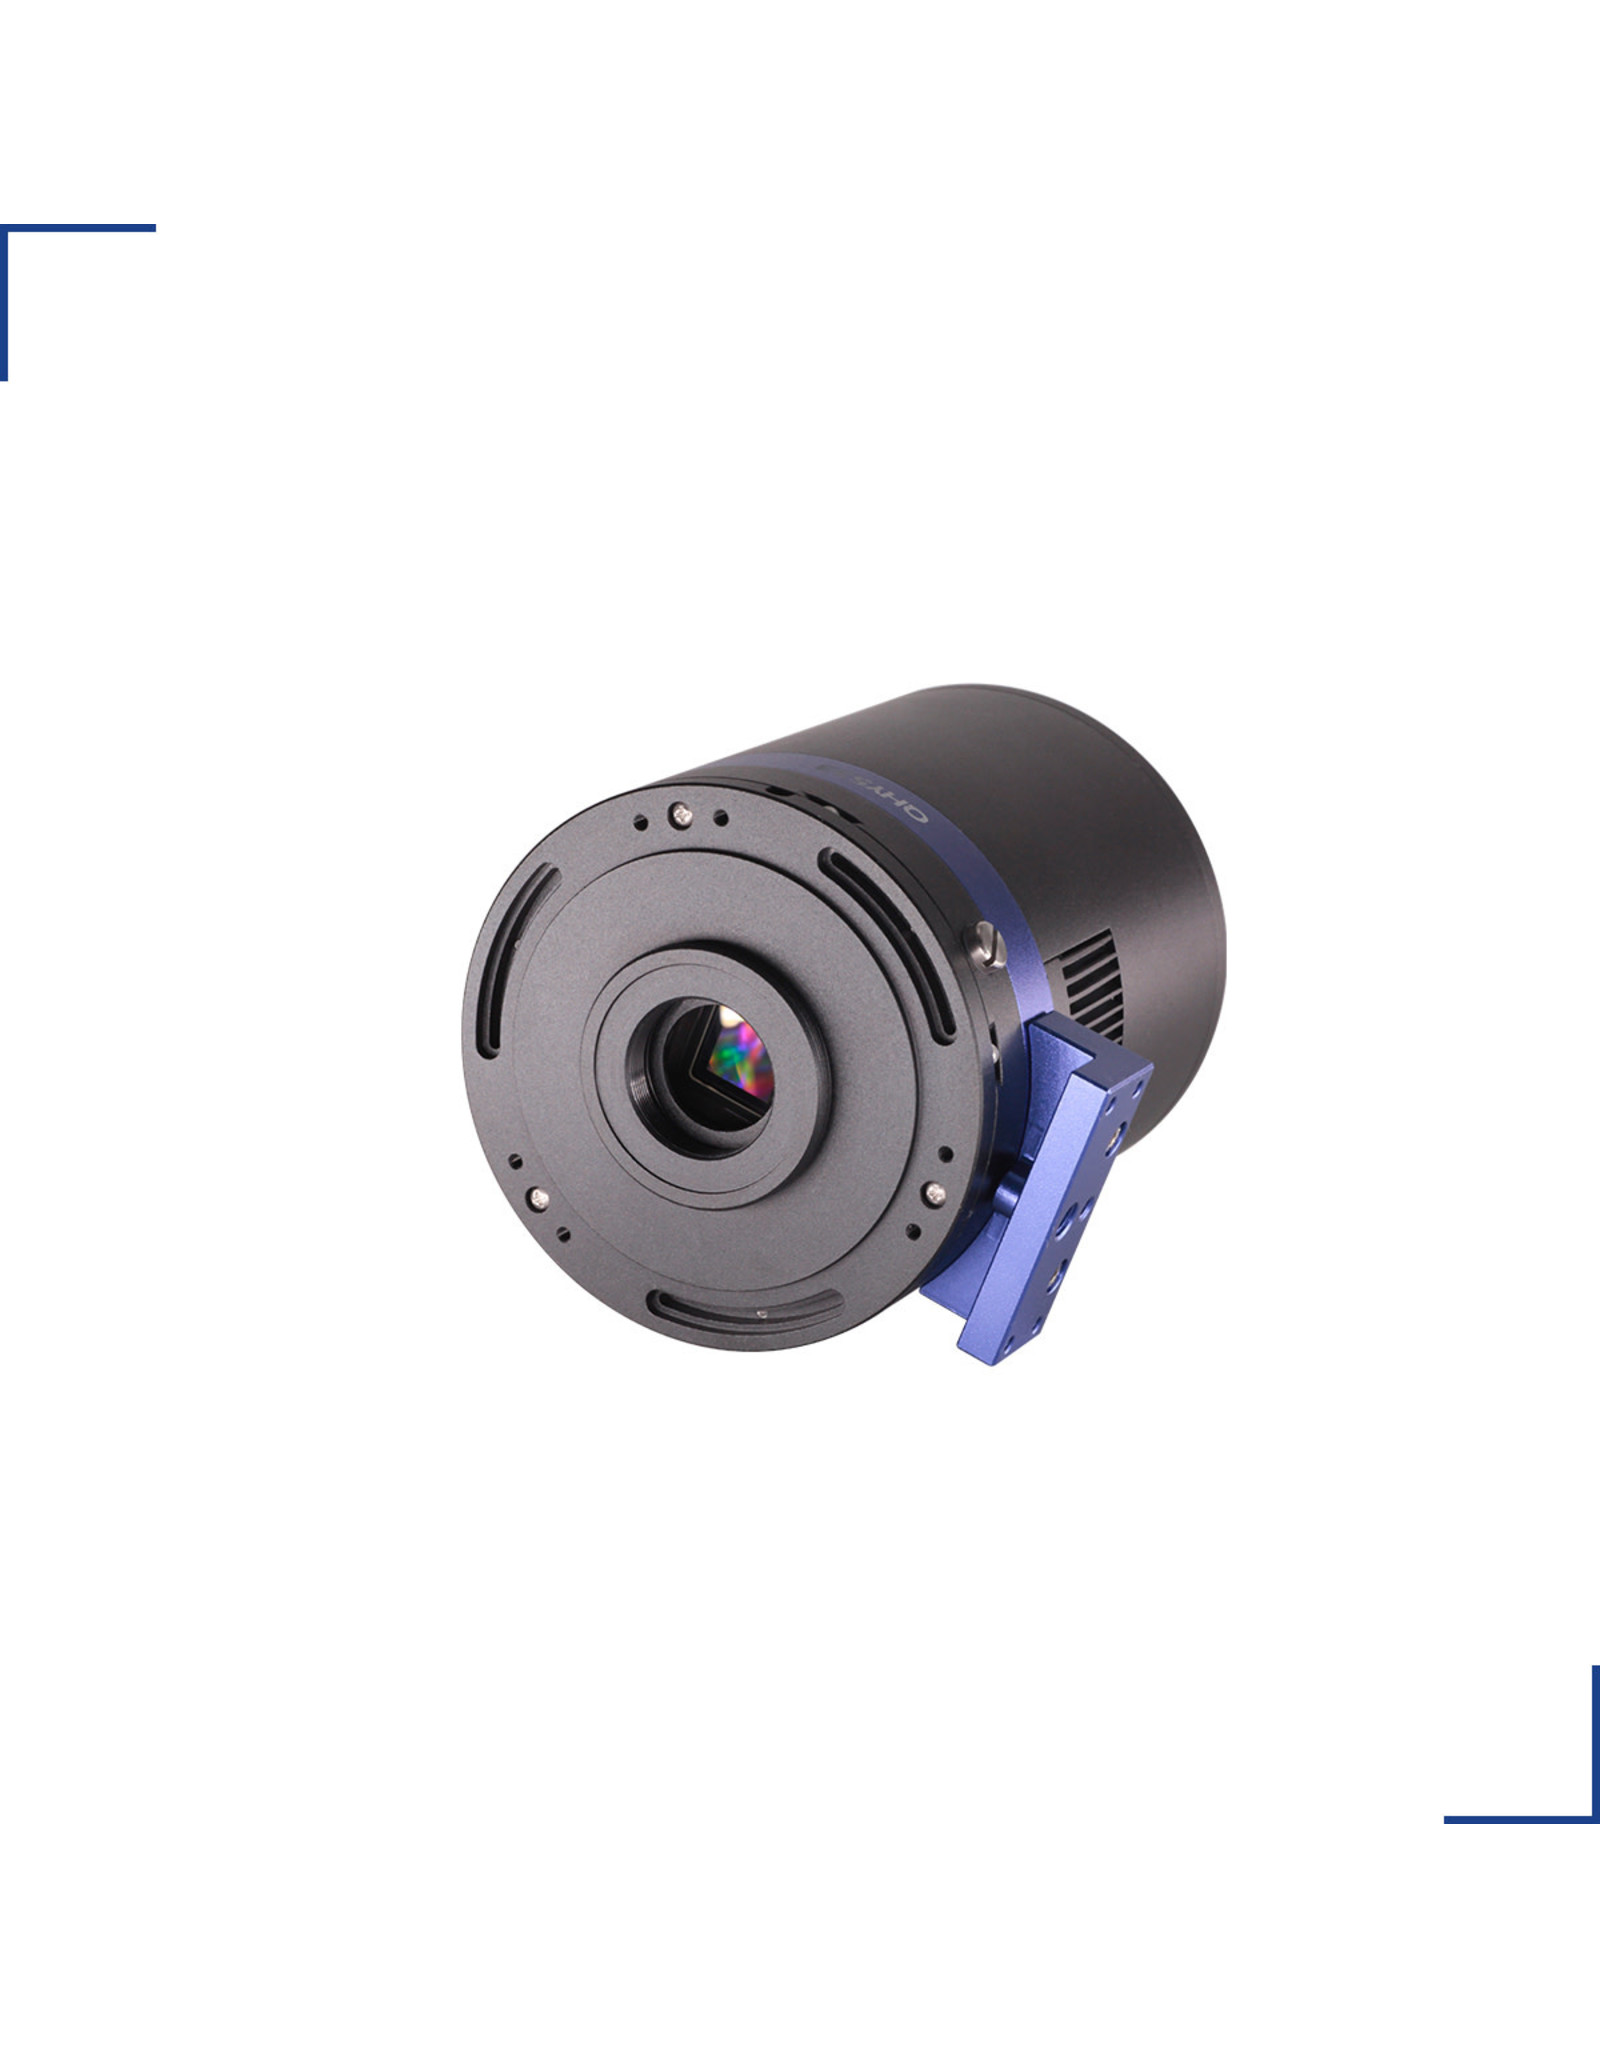 QHY533M Monochrome Camera